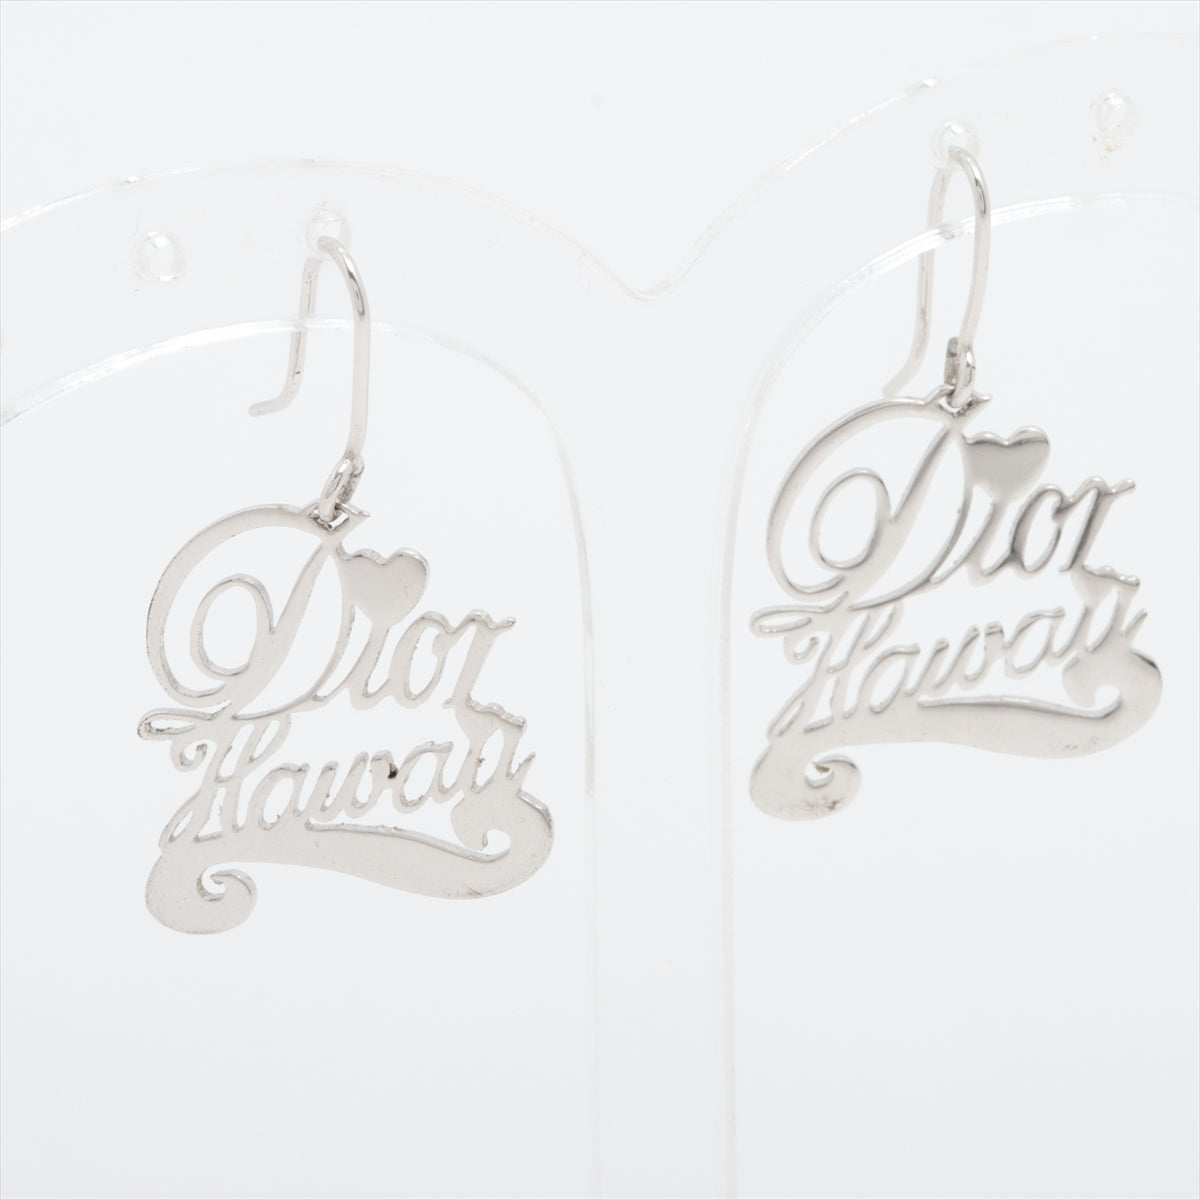 Dior Dior logo Earrings (For Both Ears) metal Silver Silhouette